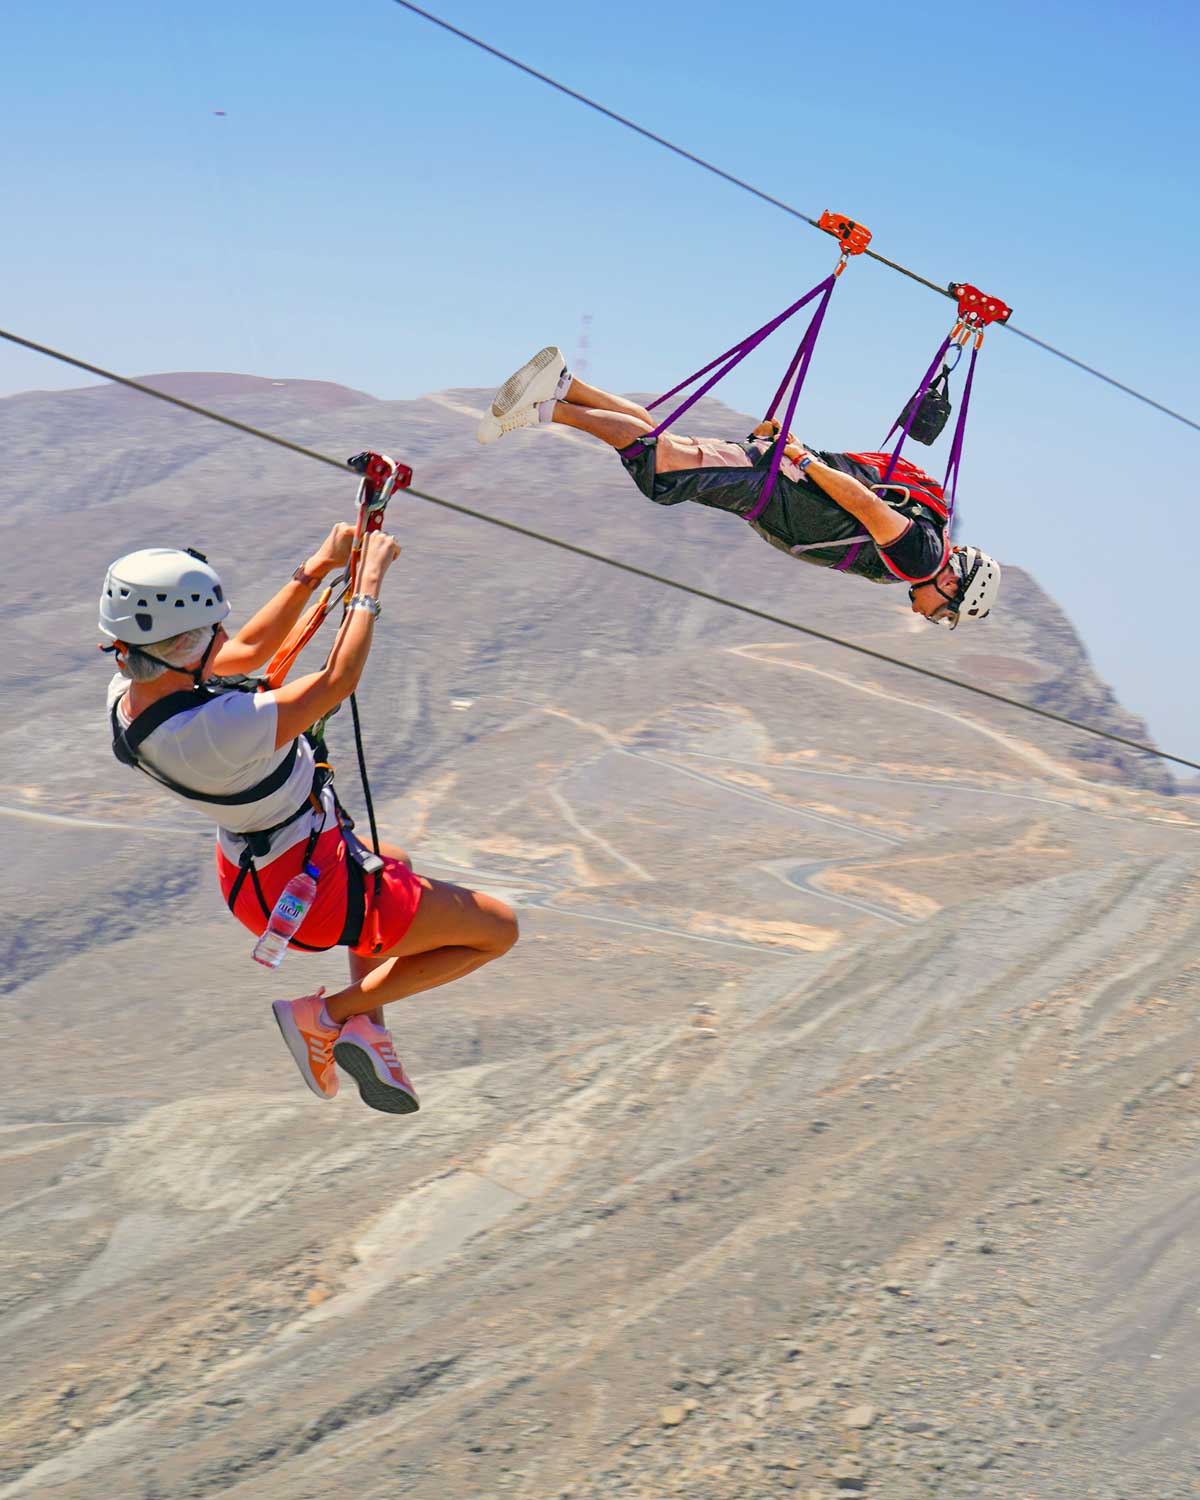 RAK Jebel Jais Zipline - Extreme Tour Ticket